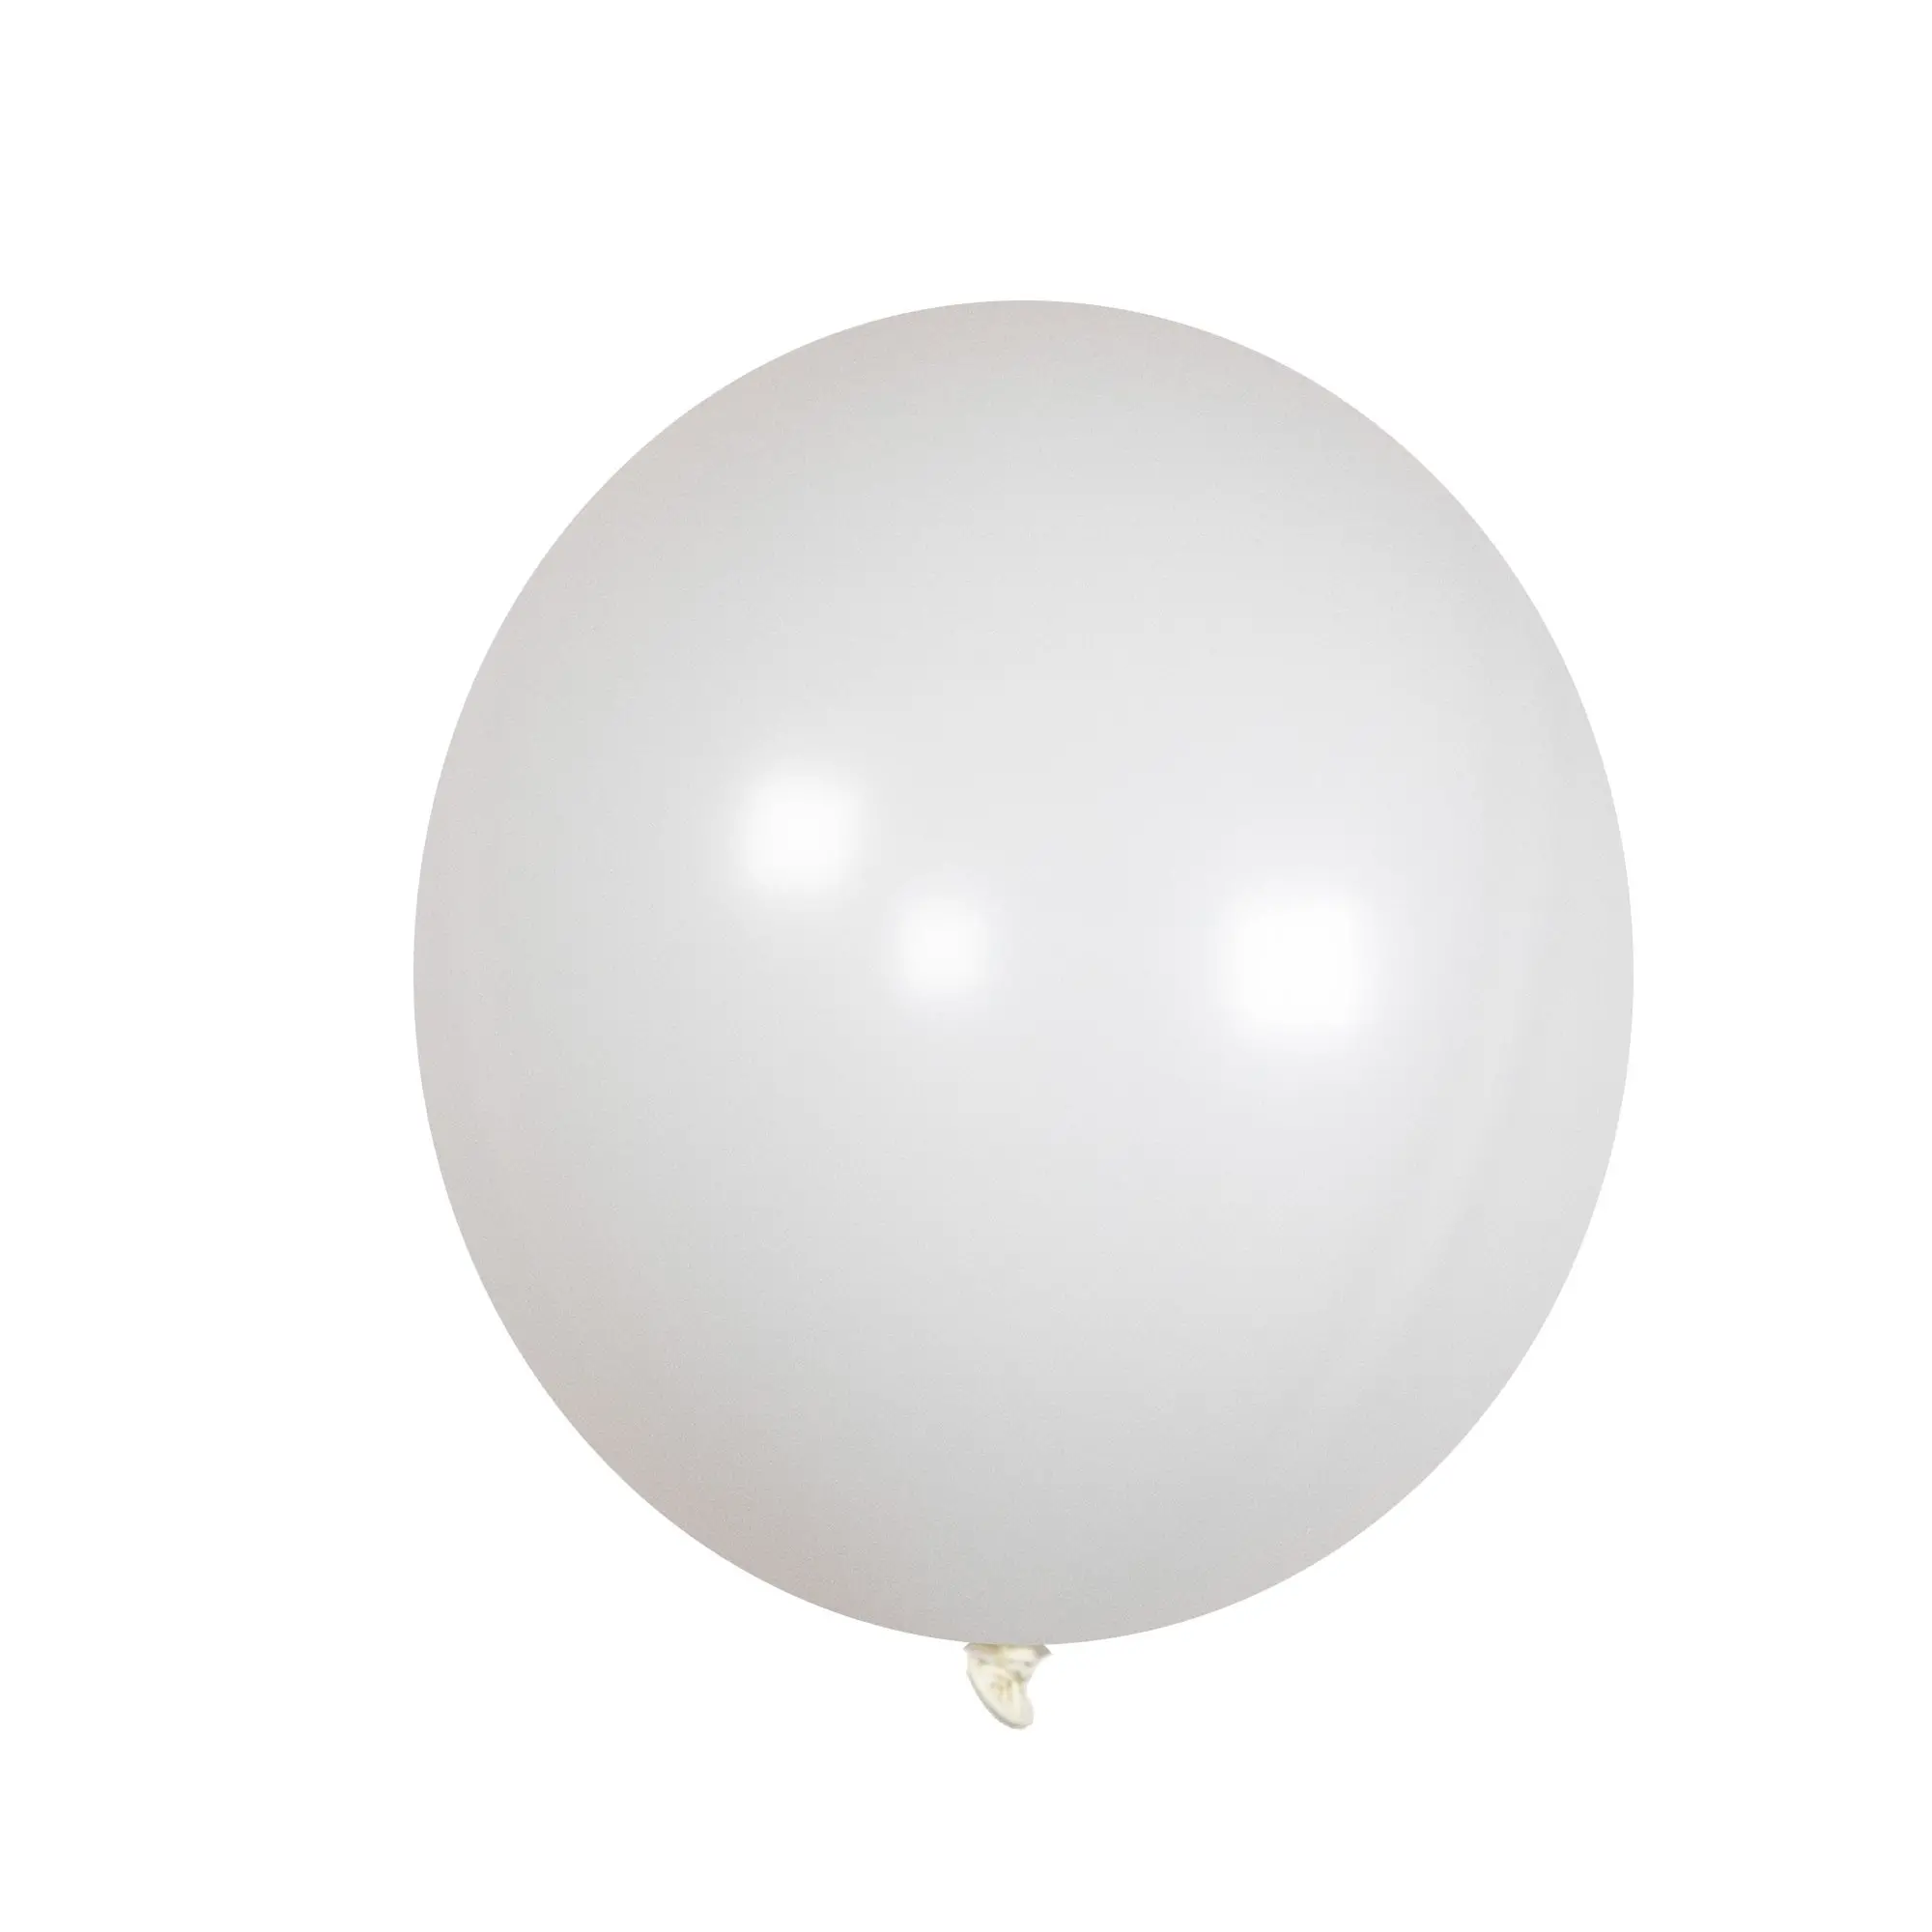 Latex colorful balloon – 48 cm - White